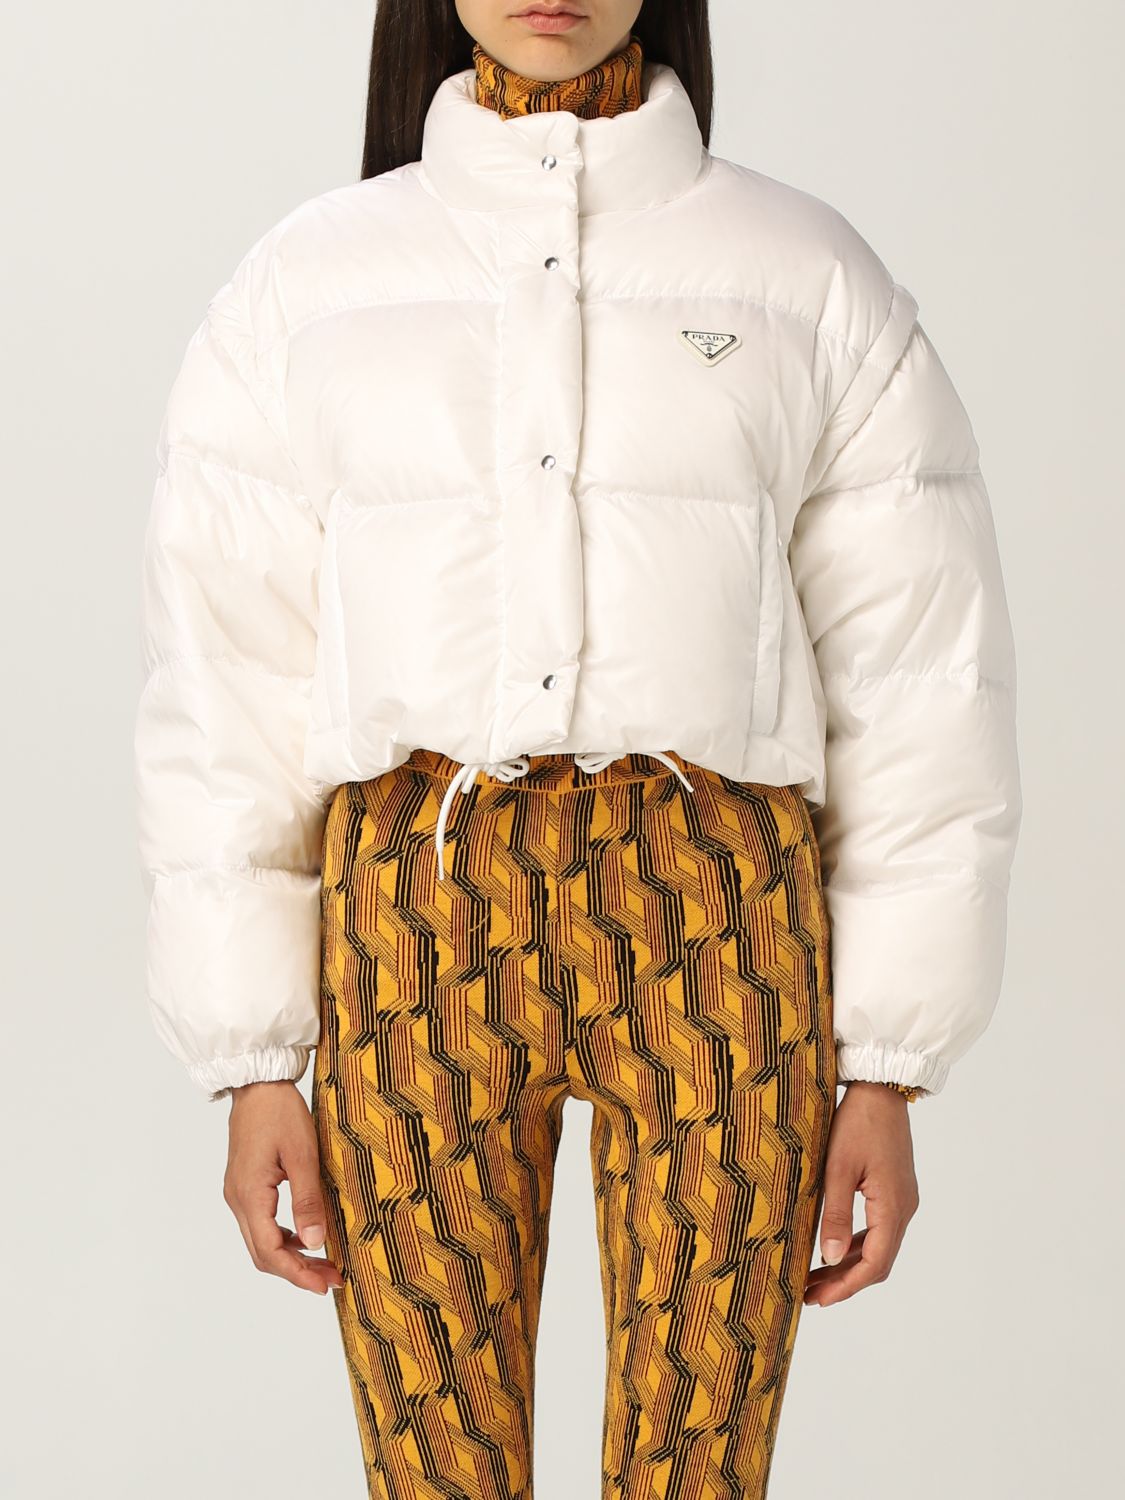 PRADA: down jacket in cropped nylon - White | Prada jacket 291805 1IE0  online on 